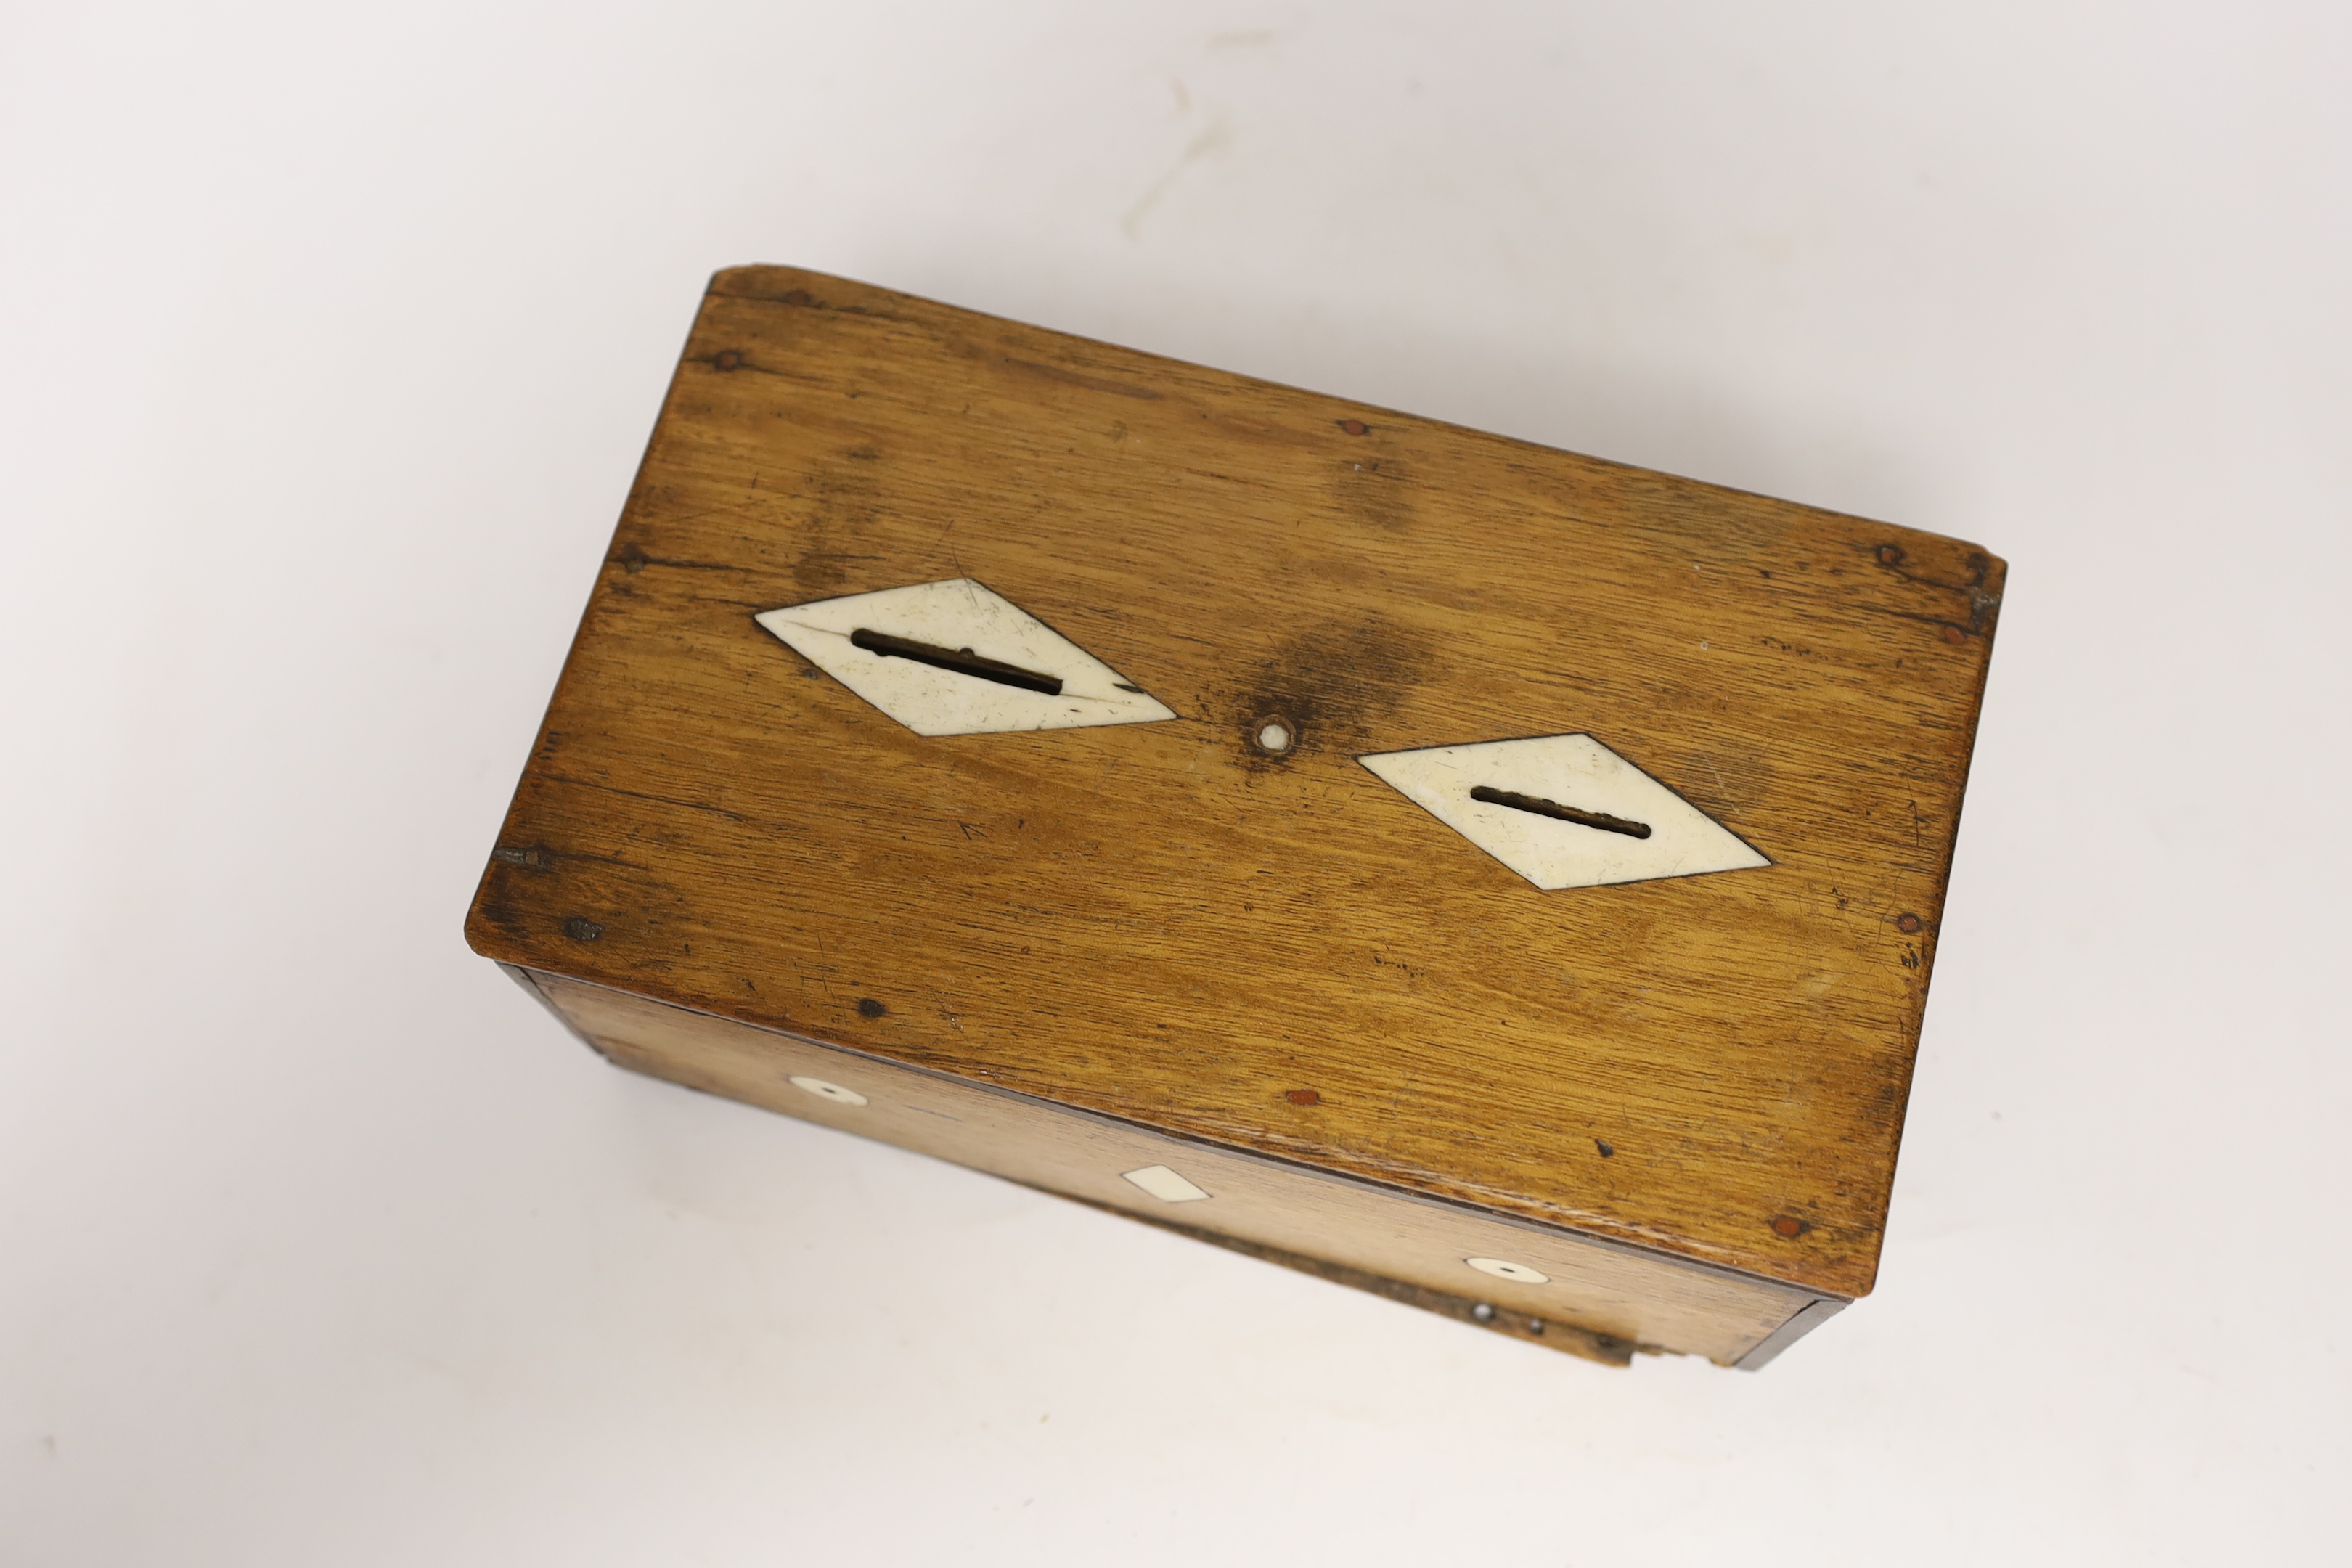 A mahogany church collection box, inlaid with bone, 23 x 13cm